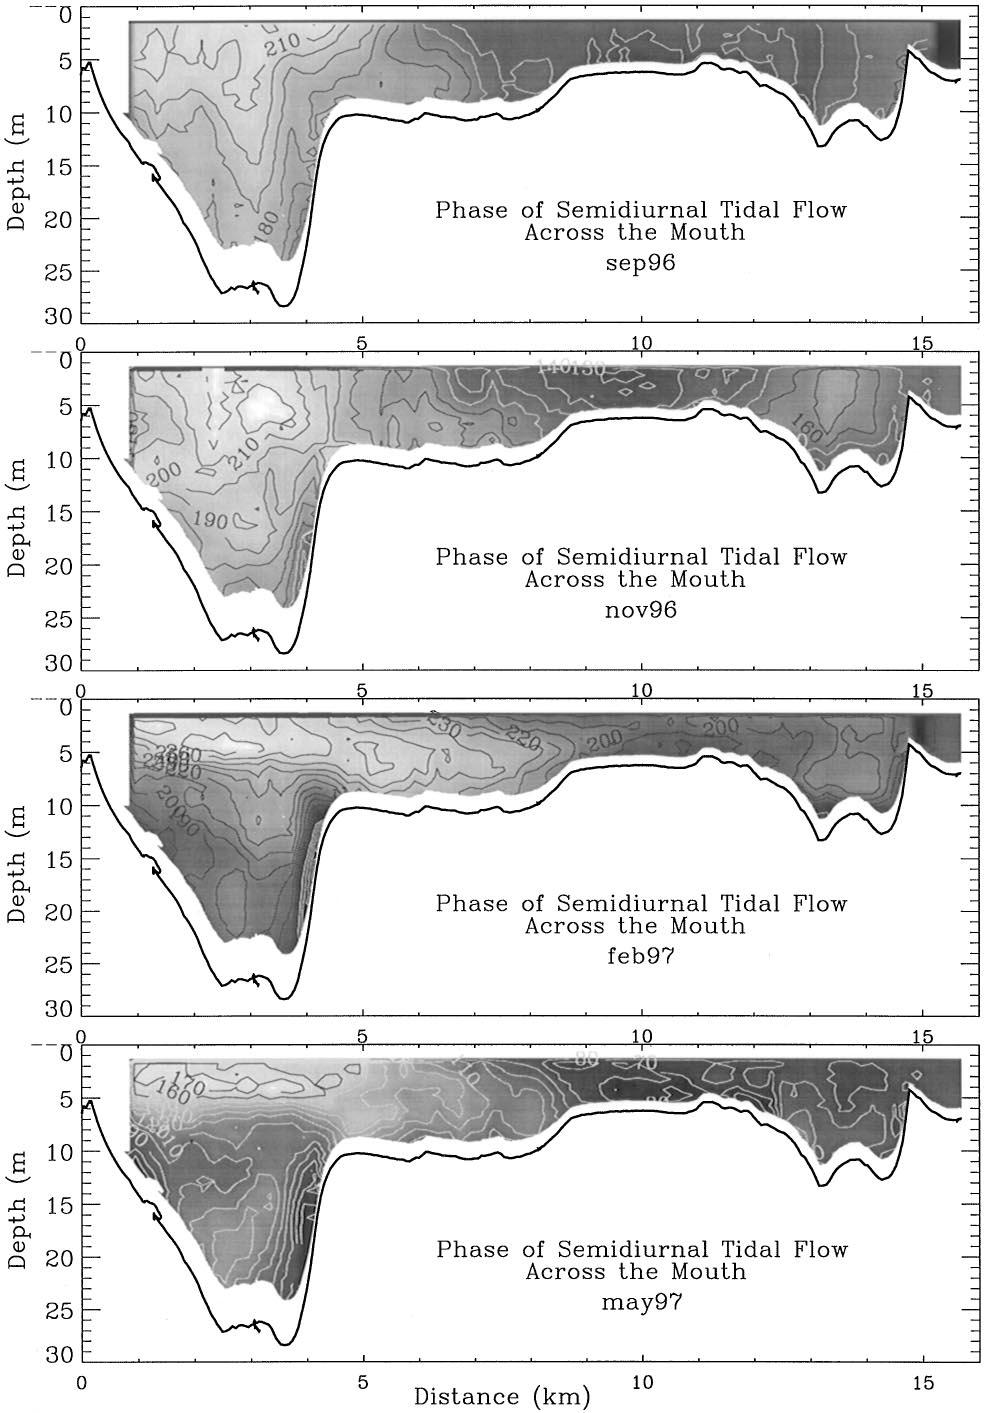 1164 A. Valle Levinson et al./continental Shelf Research 18 (1998) 1157 1177 Fig. 3.